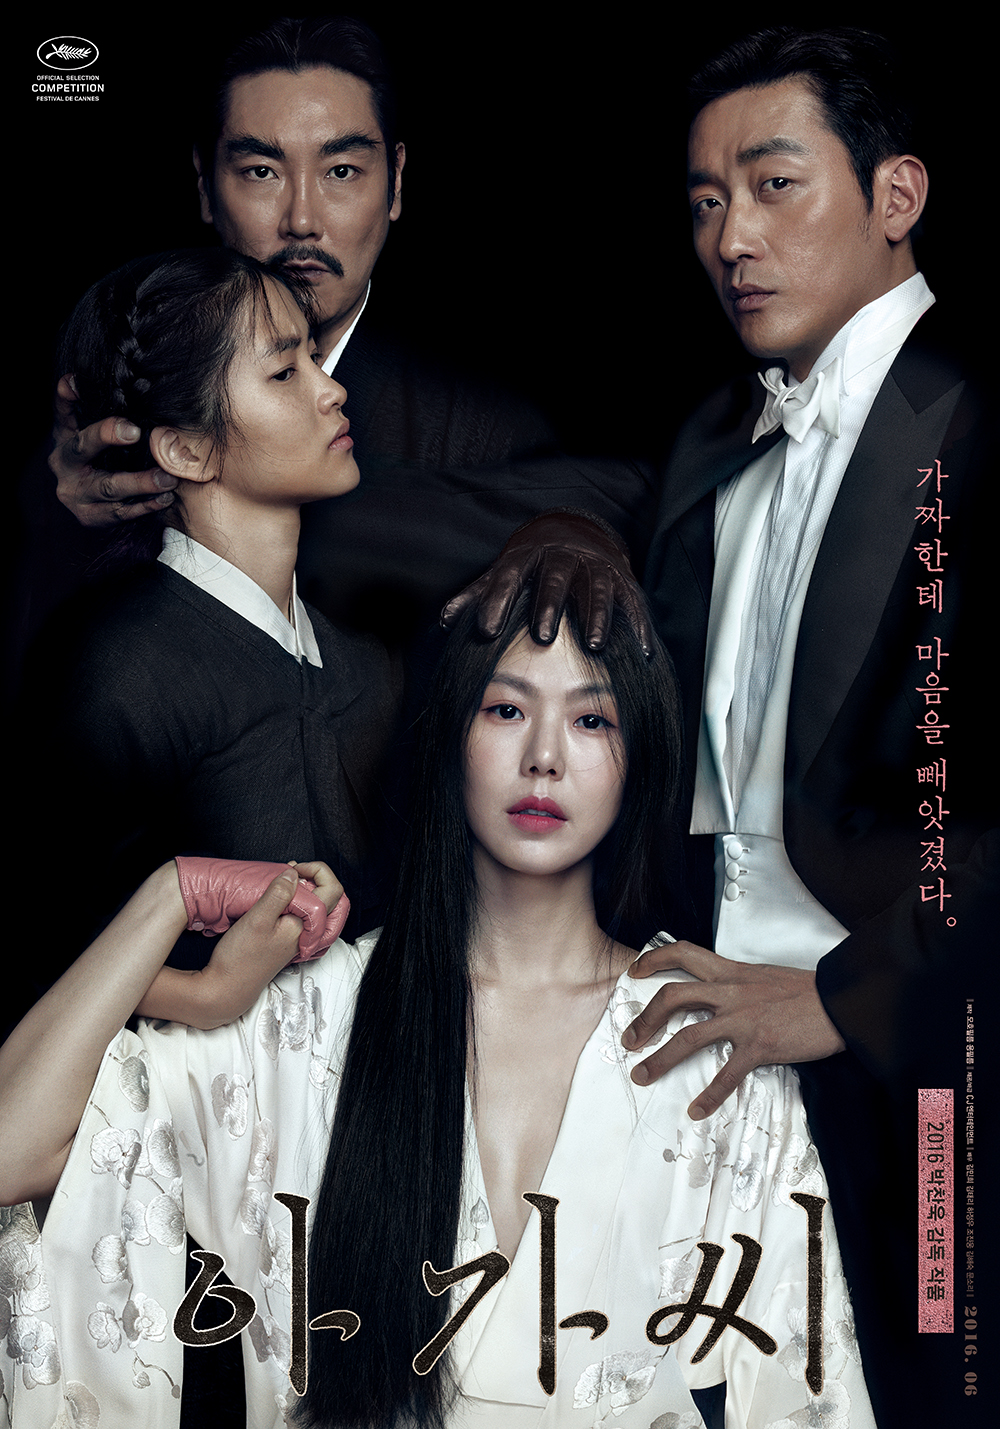 11 Rekomendasi film Korea misteri, alur The Day I Died bikin mikir